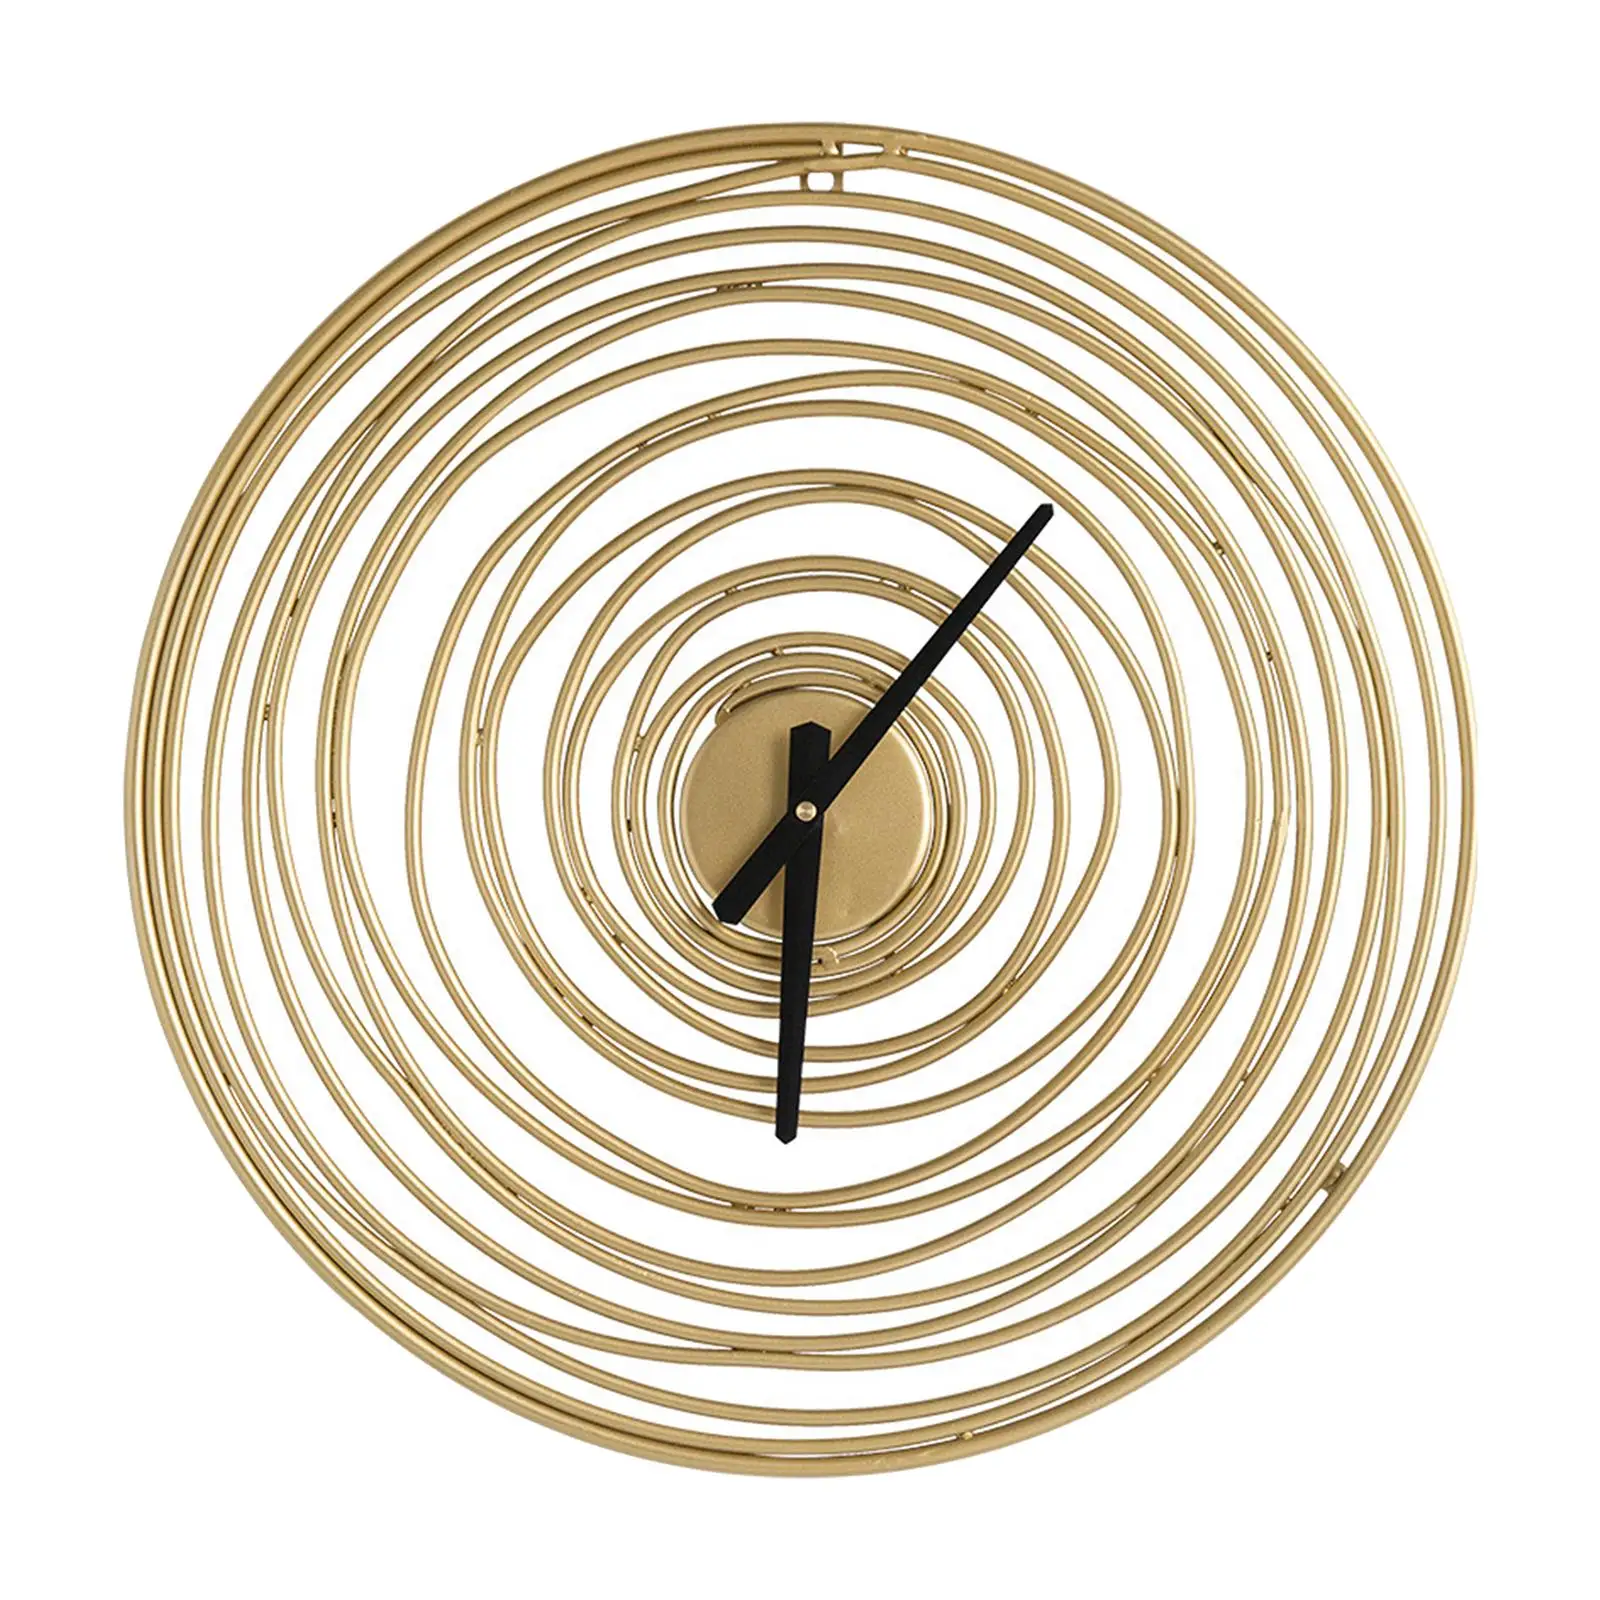 Metal Wall Clock Decorative Non Ticking Office Wood Grain Fashion